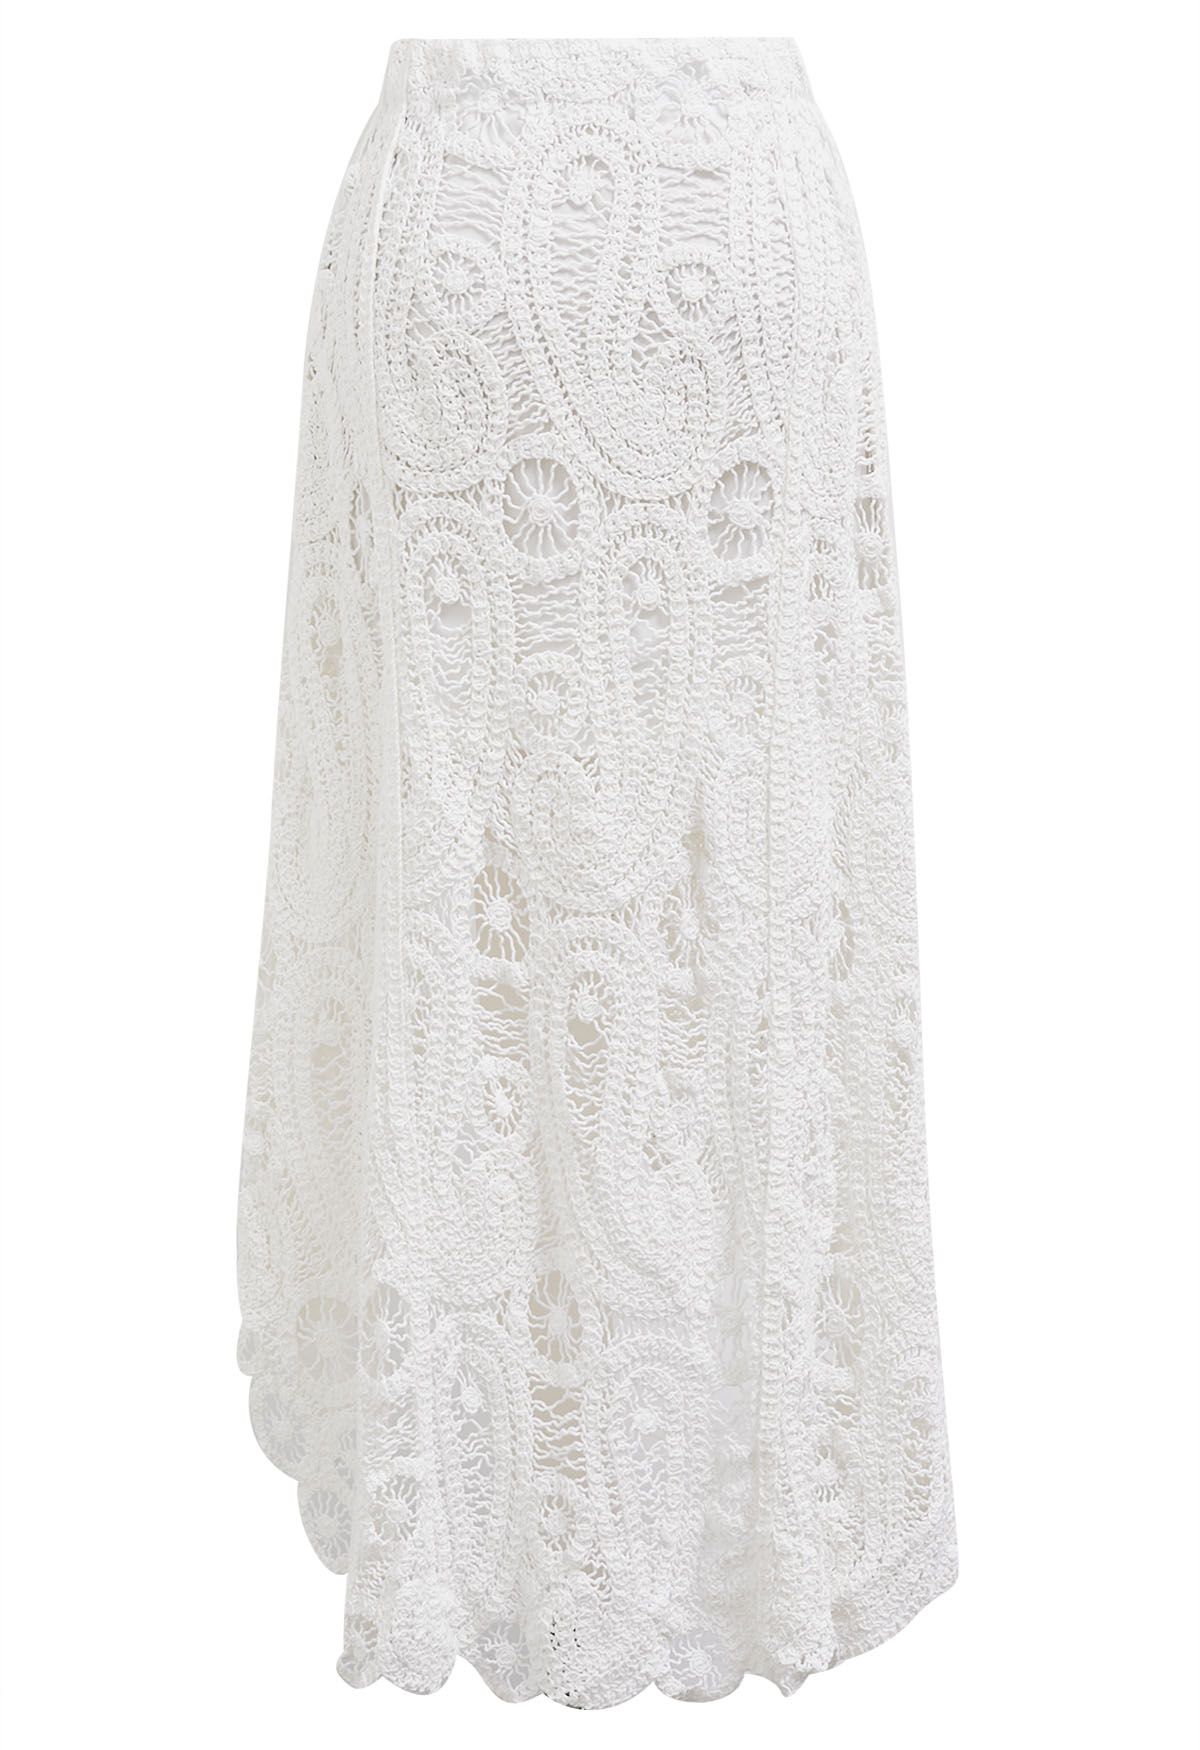 Paisley Cutwork Lace Asymmetric Hemline Skirt